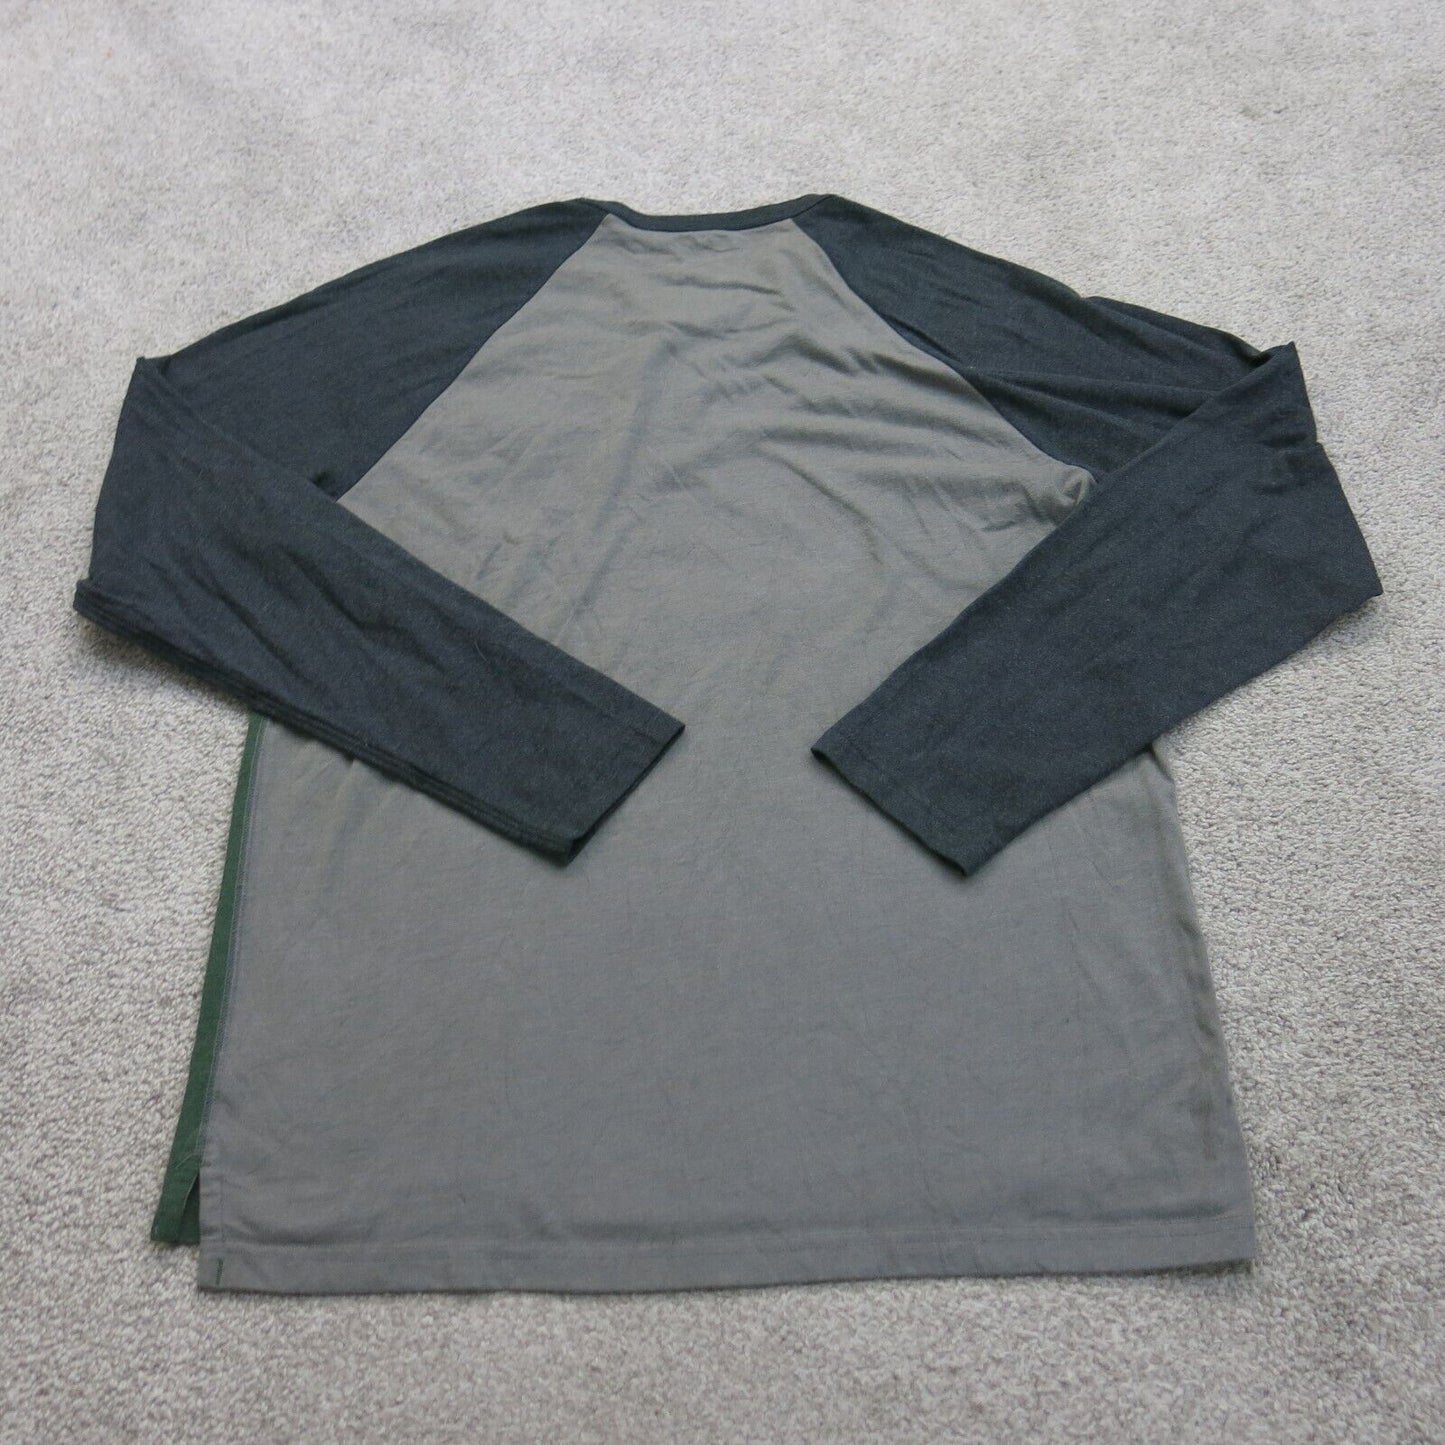 Levi Struss & Co Mens Long Sleeve Shirts Crew Neck Pocket Green Gray Size Medium